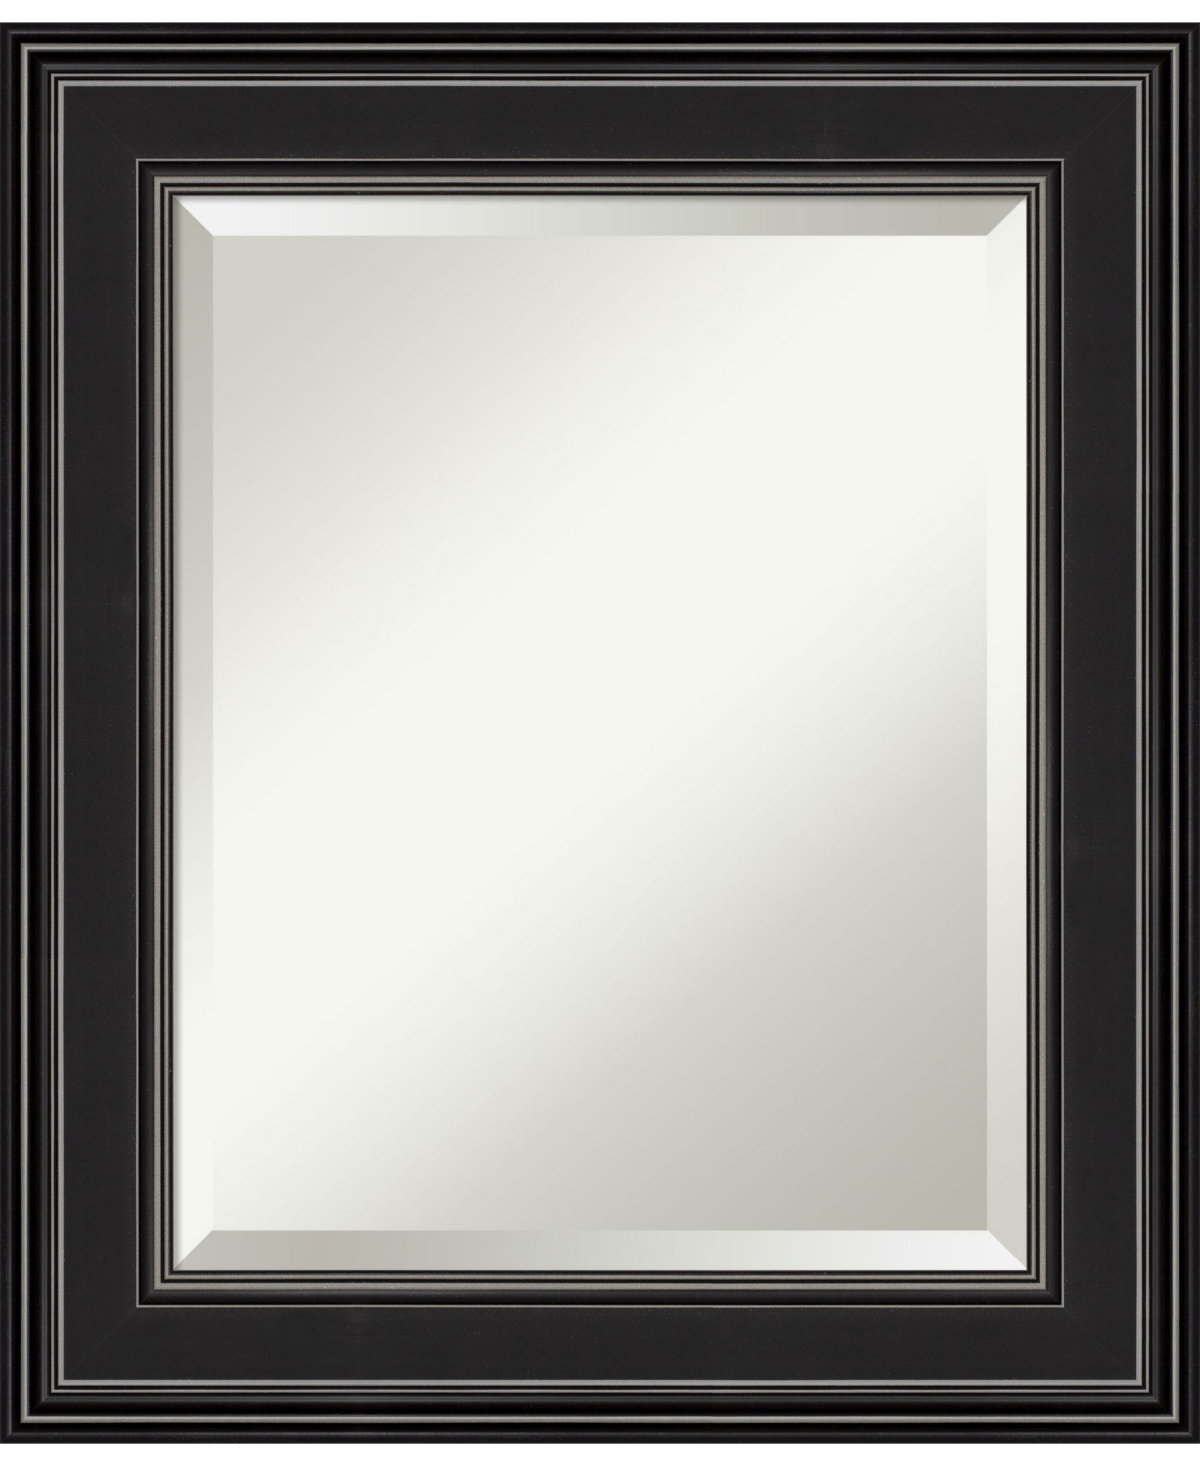 Ridge Framed Bathroom Vanity Wall Mirror, 21.75" x 25.75" - Black